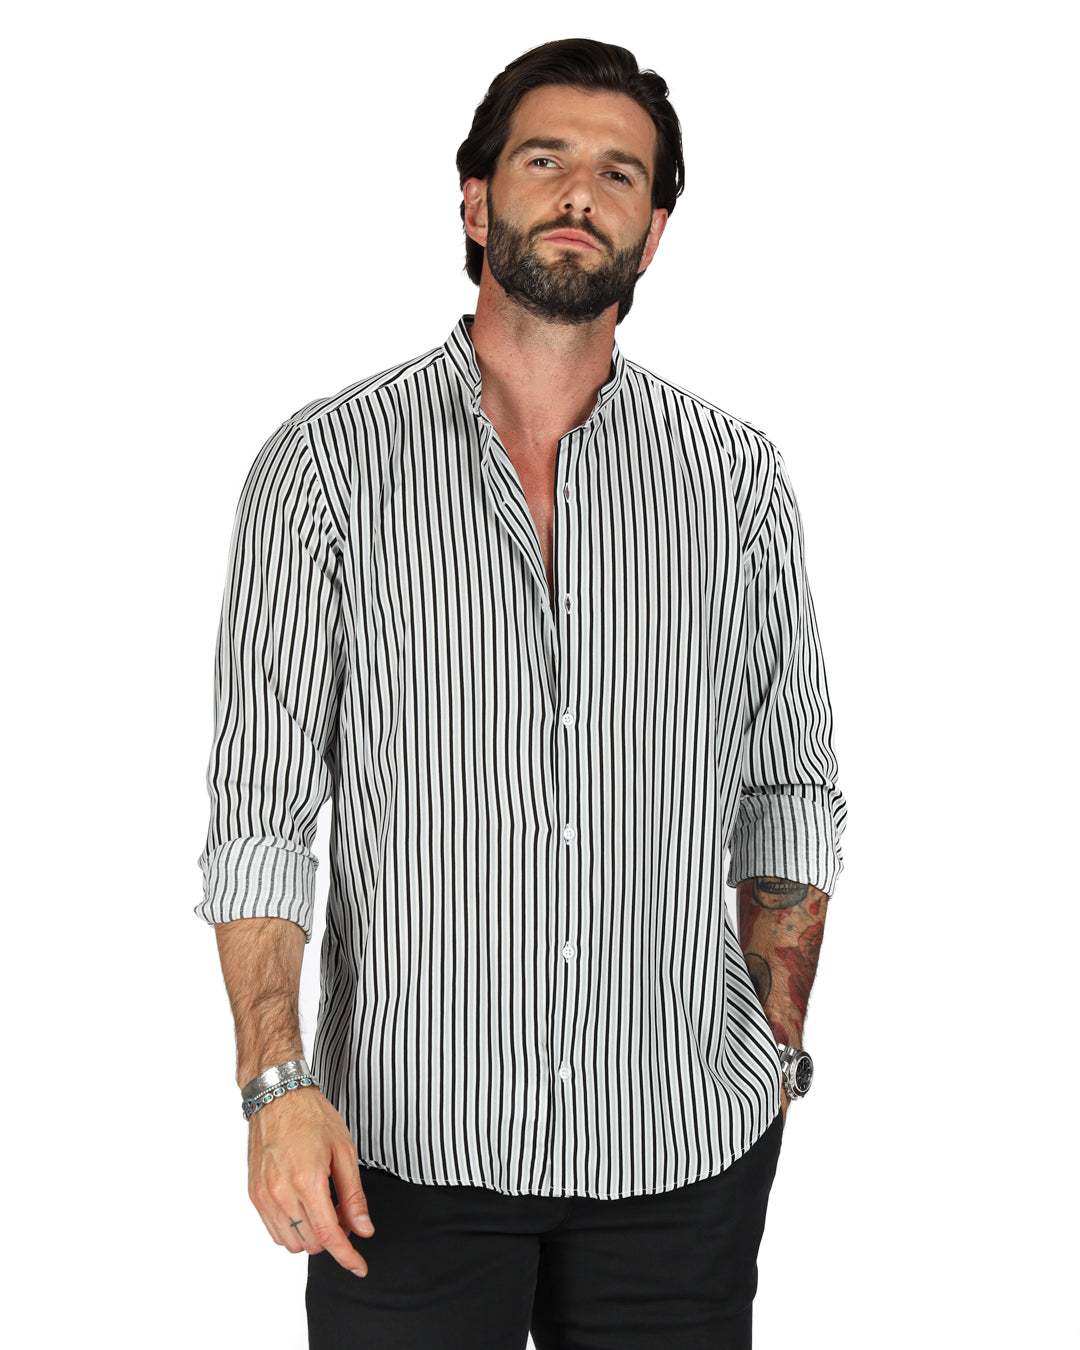 Grenada - Gray striped patterned Korean shirt